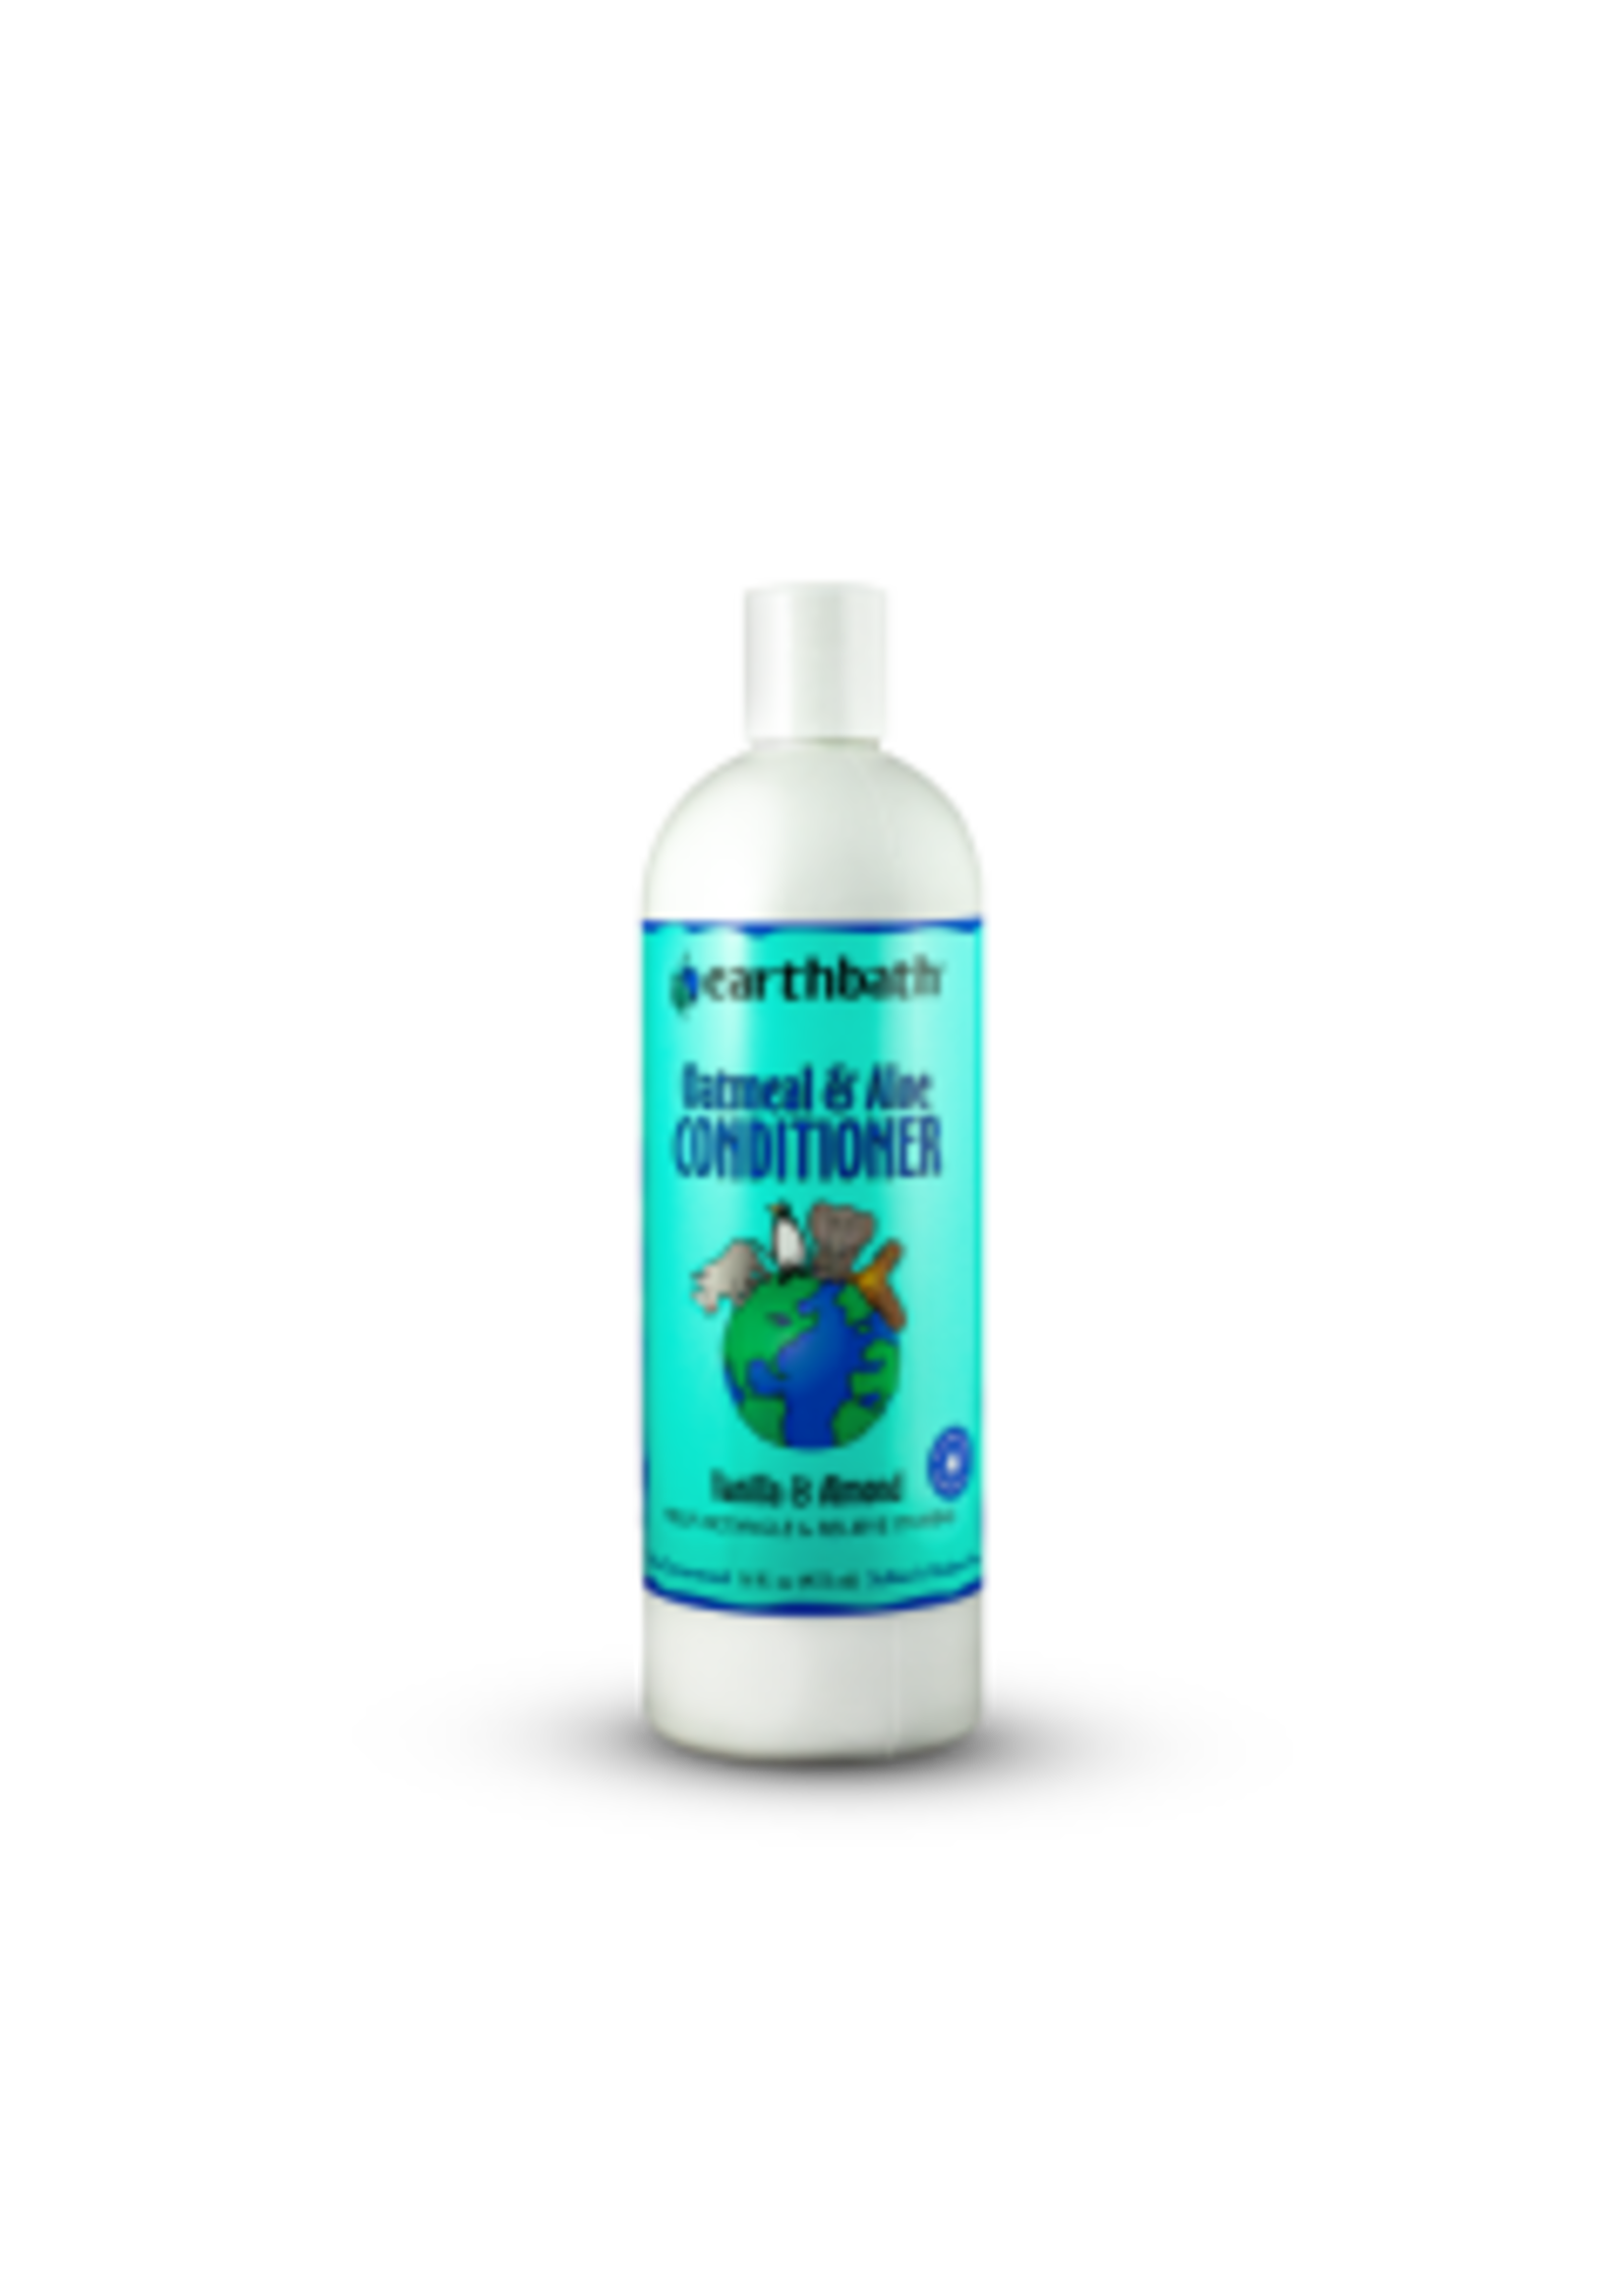 Earthbath Earthbath - Oatmeal & Aloe Conditioner Vanilla & Almond 16 oz